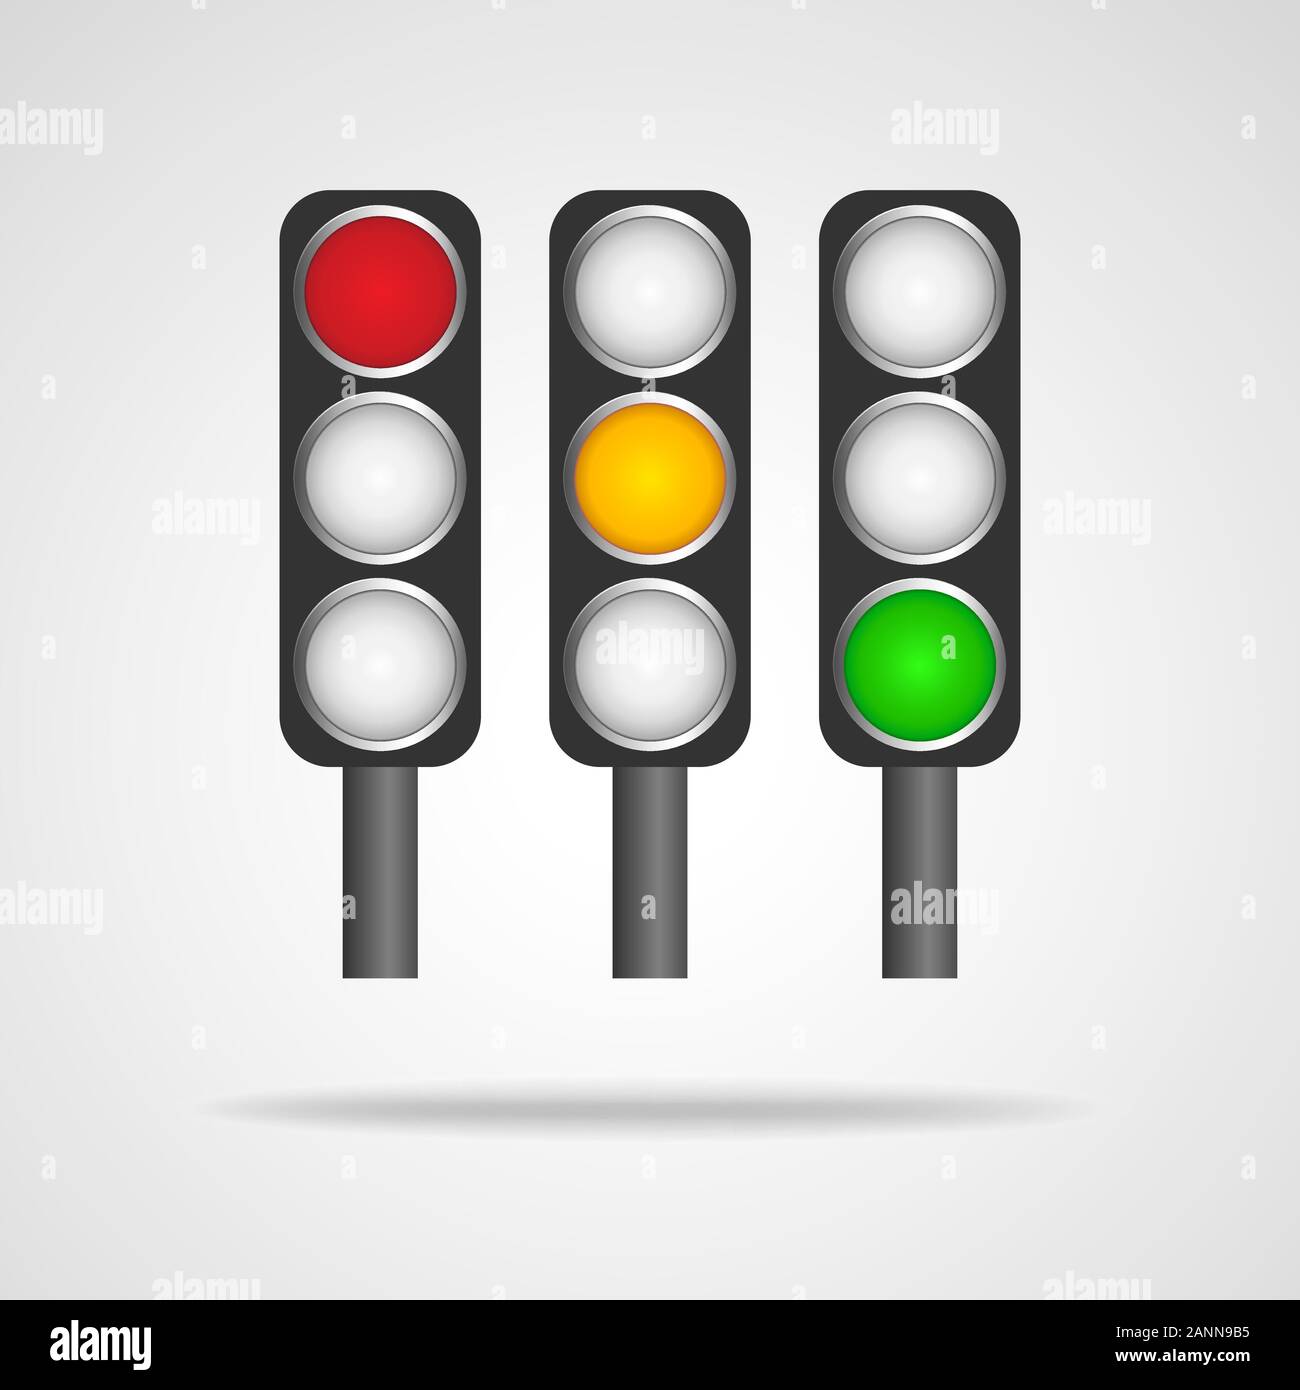 Traffic lights symbol on white background. Three urban traffic lights - vector illustration. Set of traffic lights isolated. Stock Vector